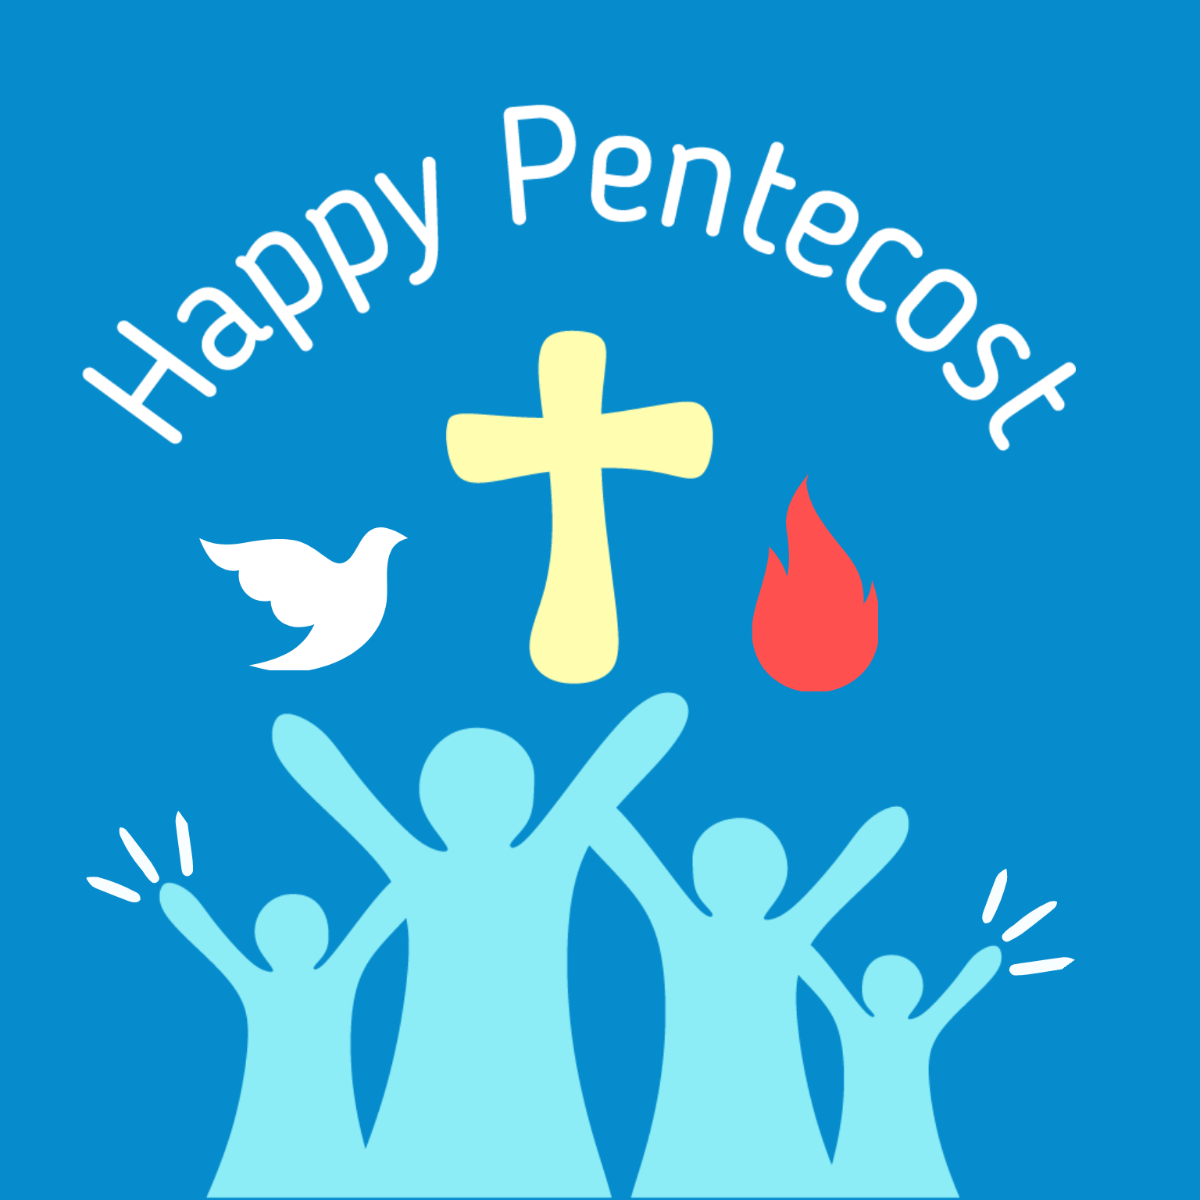 Pentecost Celebration Vector Template